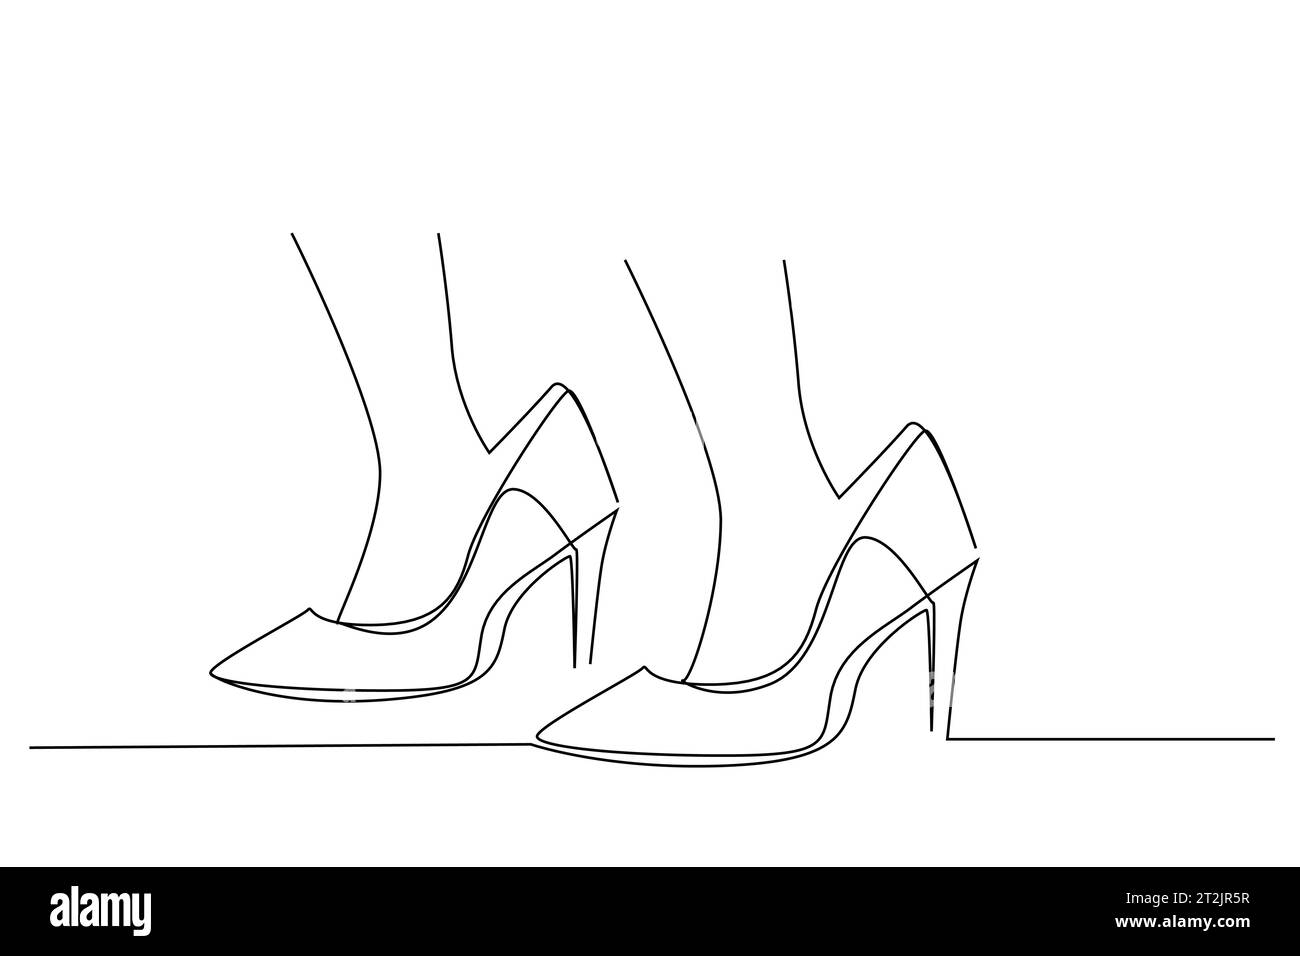 wrong order heels shoes big shoes line art Stock Vector